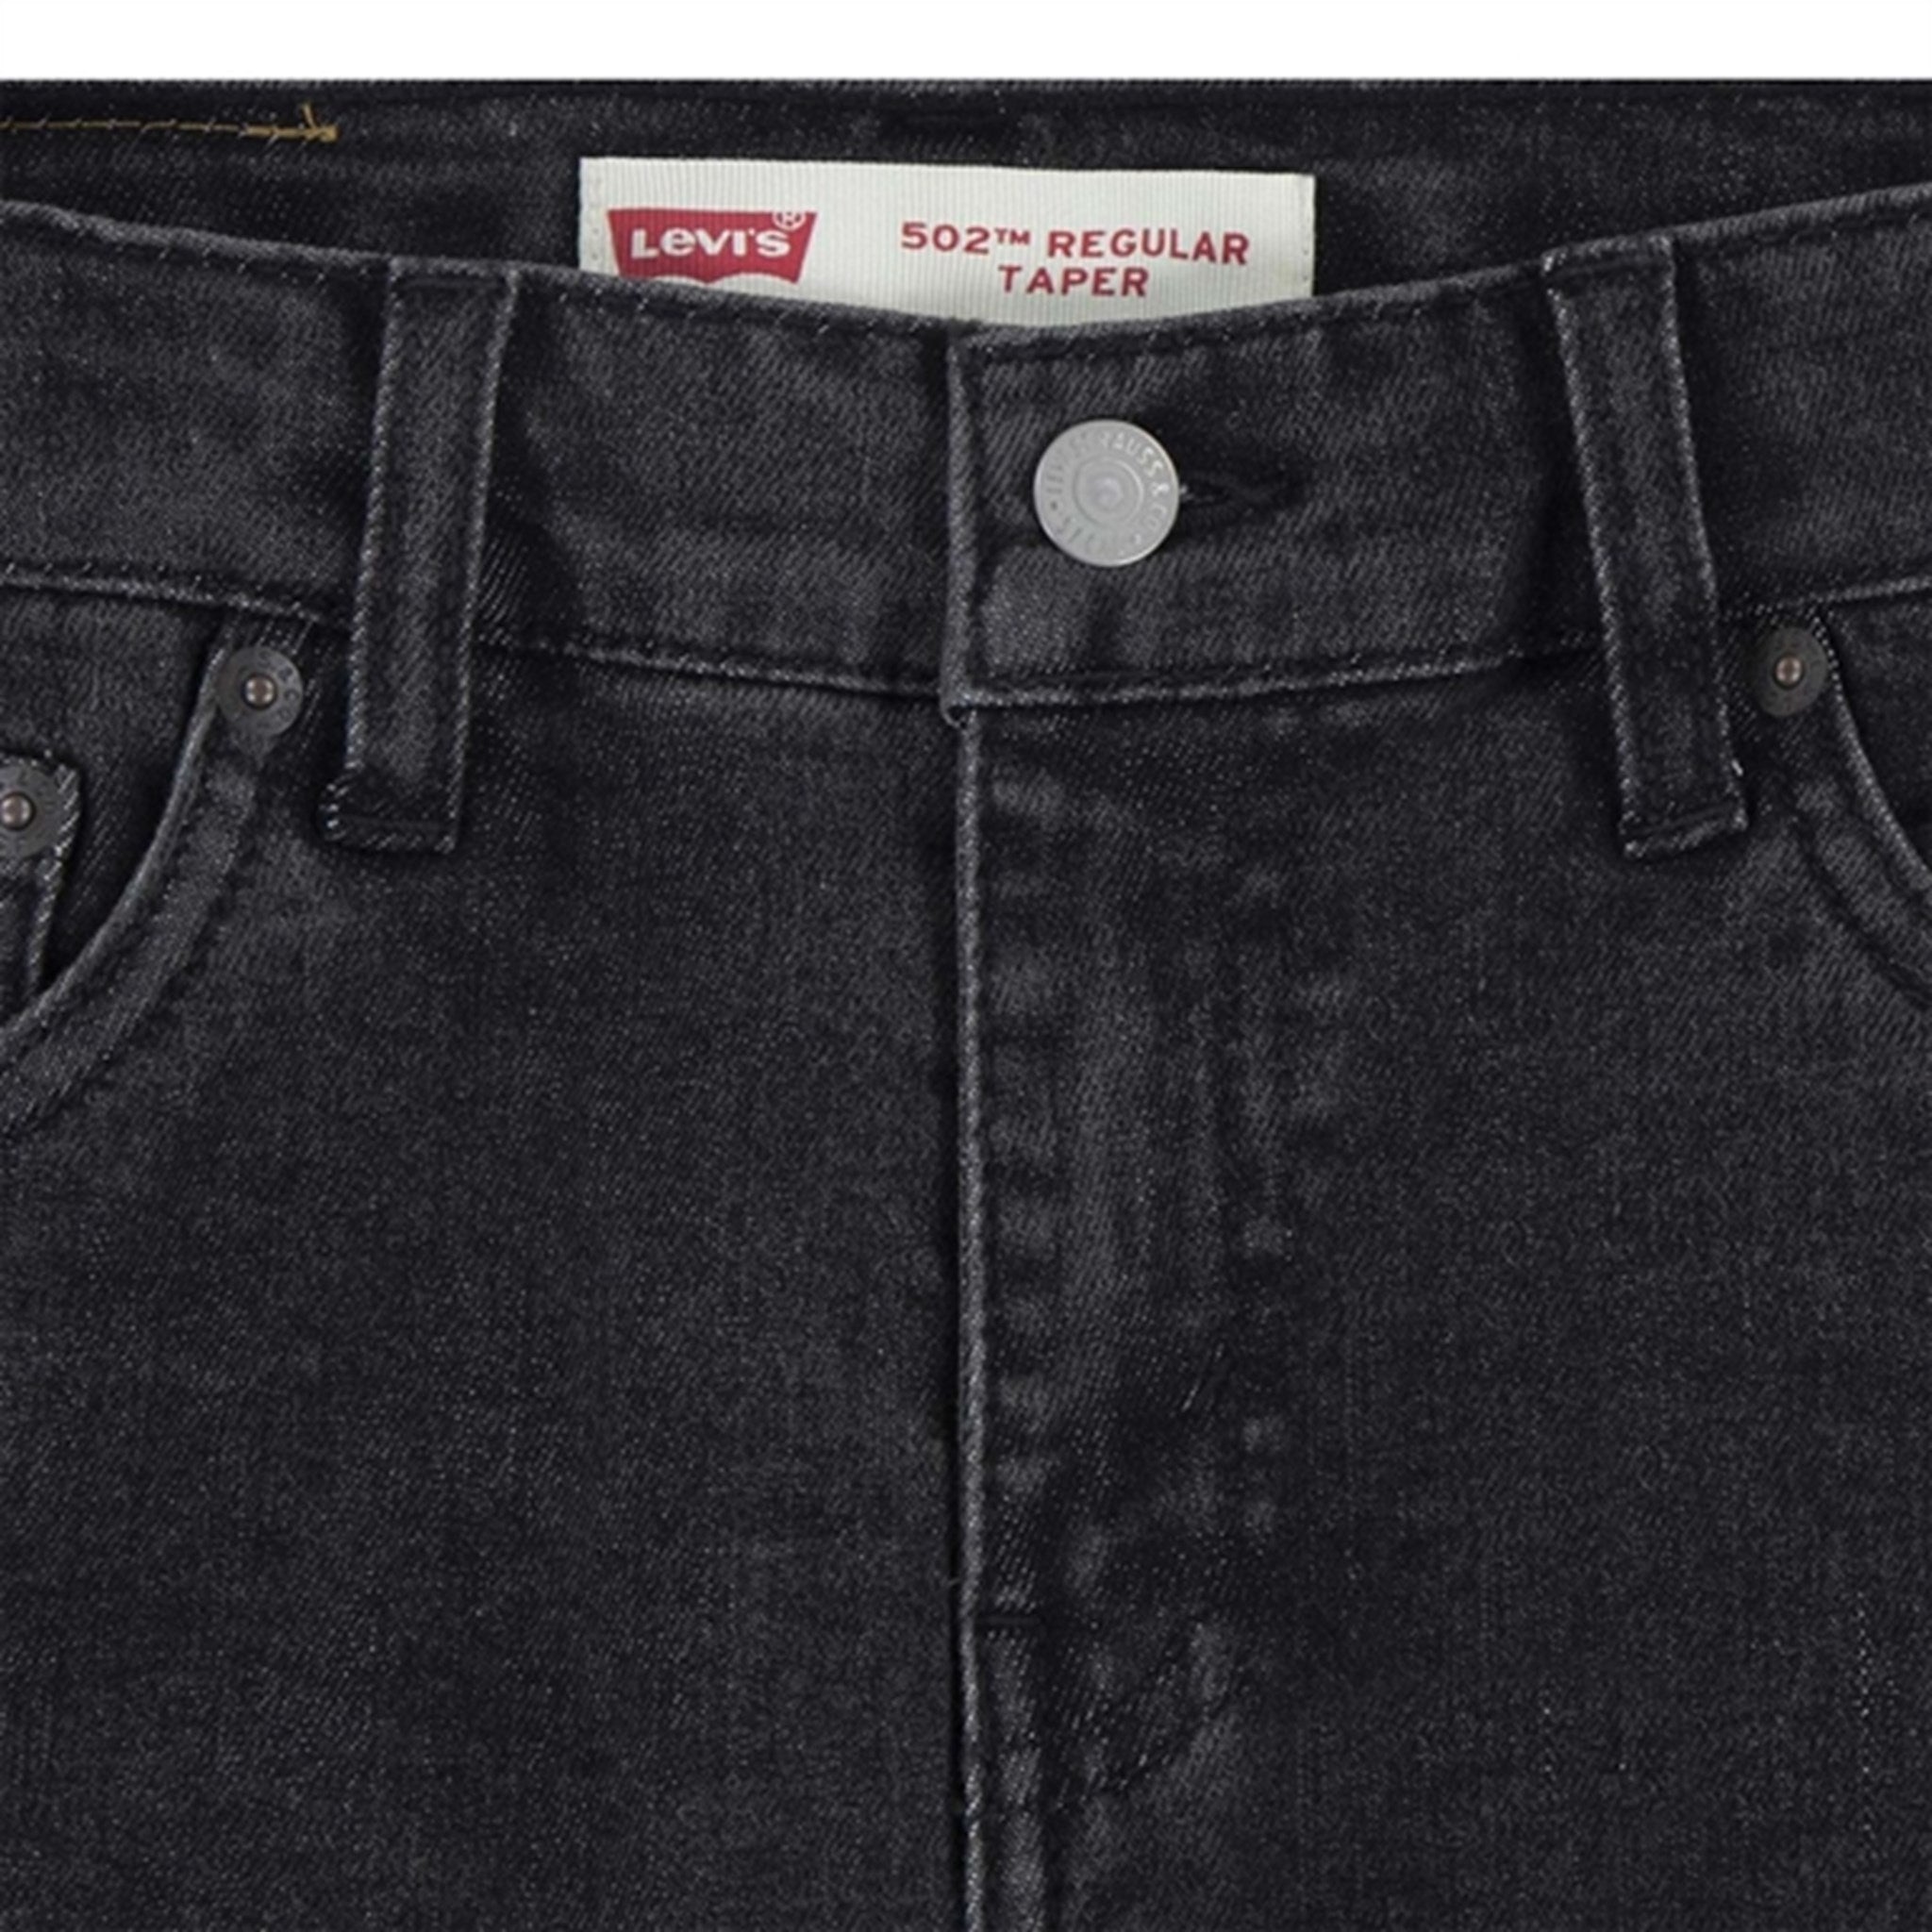 Levi's 502™ Regular Fit Tapered Jeans Finish Line 6